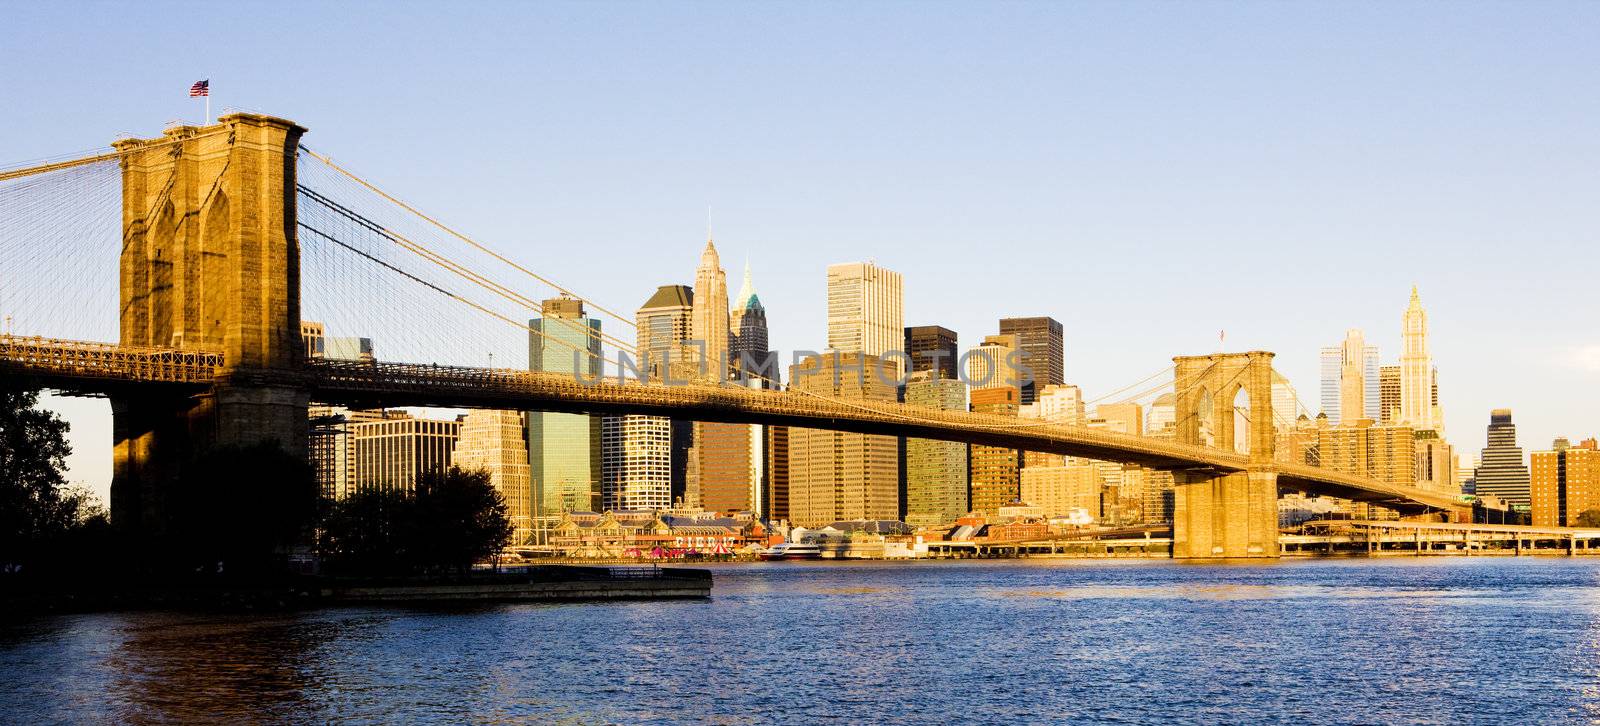 Brooklyn Bridge, Manhattan, New York City, USA by phbcz